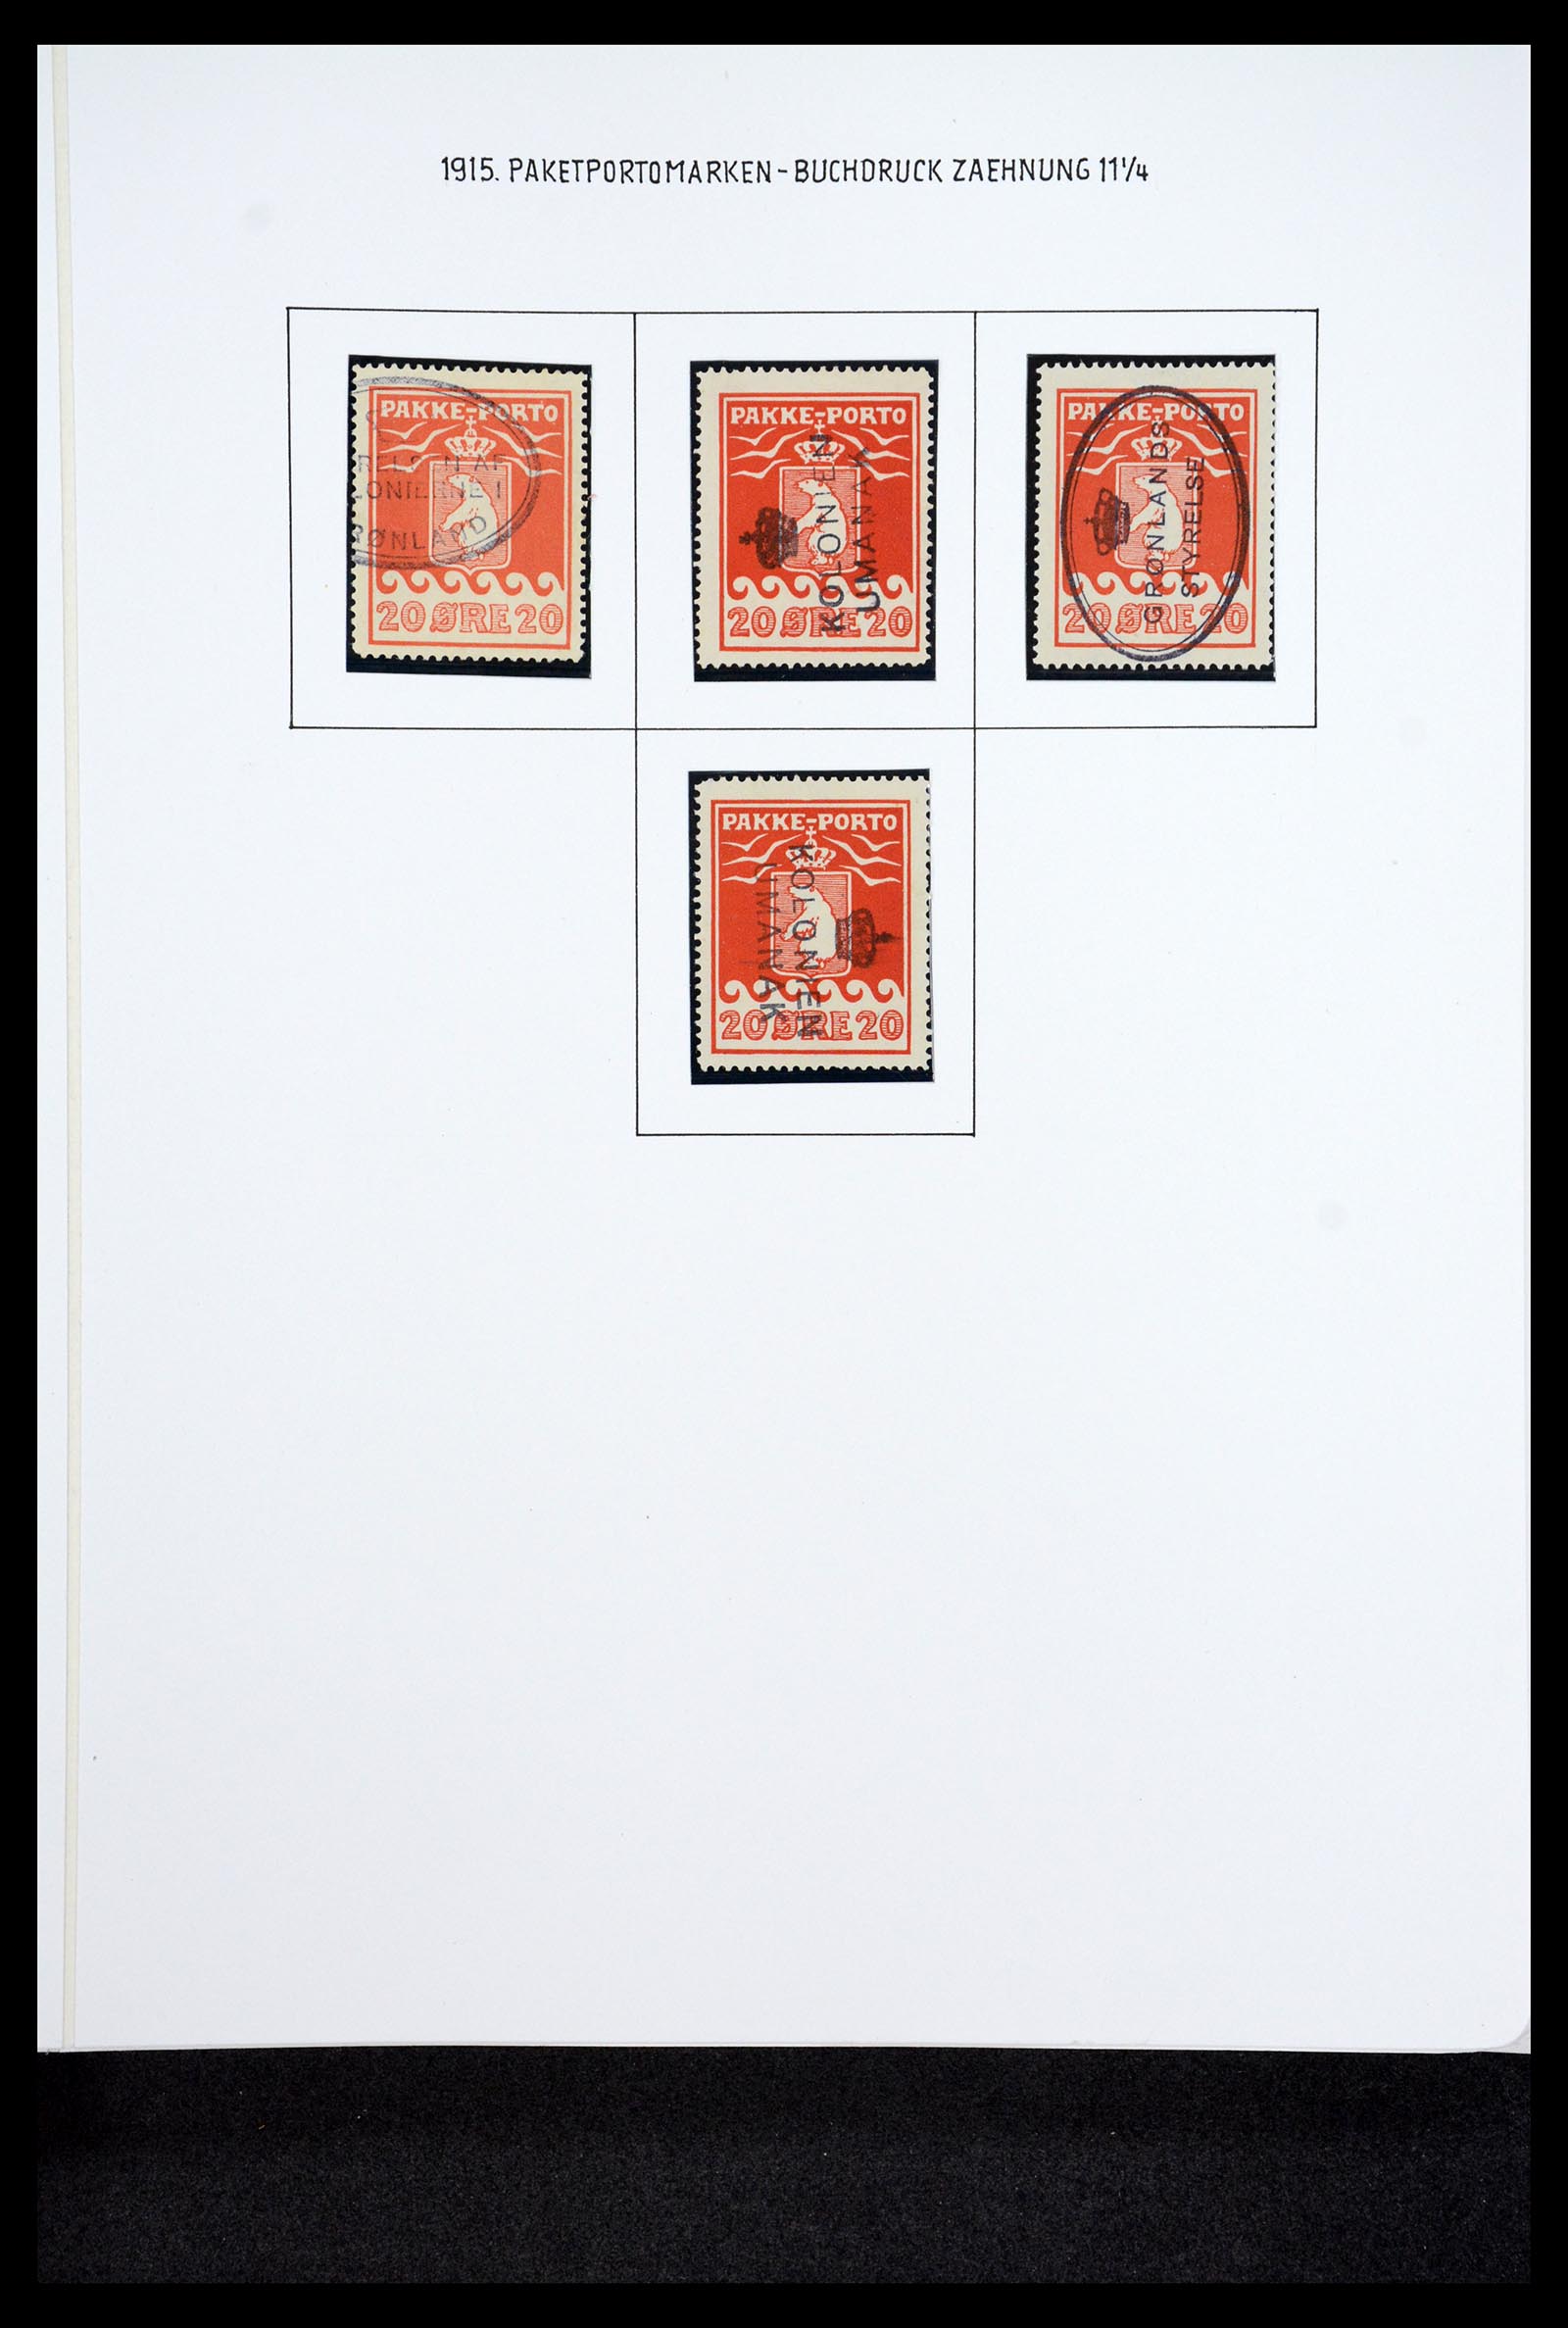 36748 004 - Stamp collection 36748 Greenland pakke-porto 1905-1930.